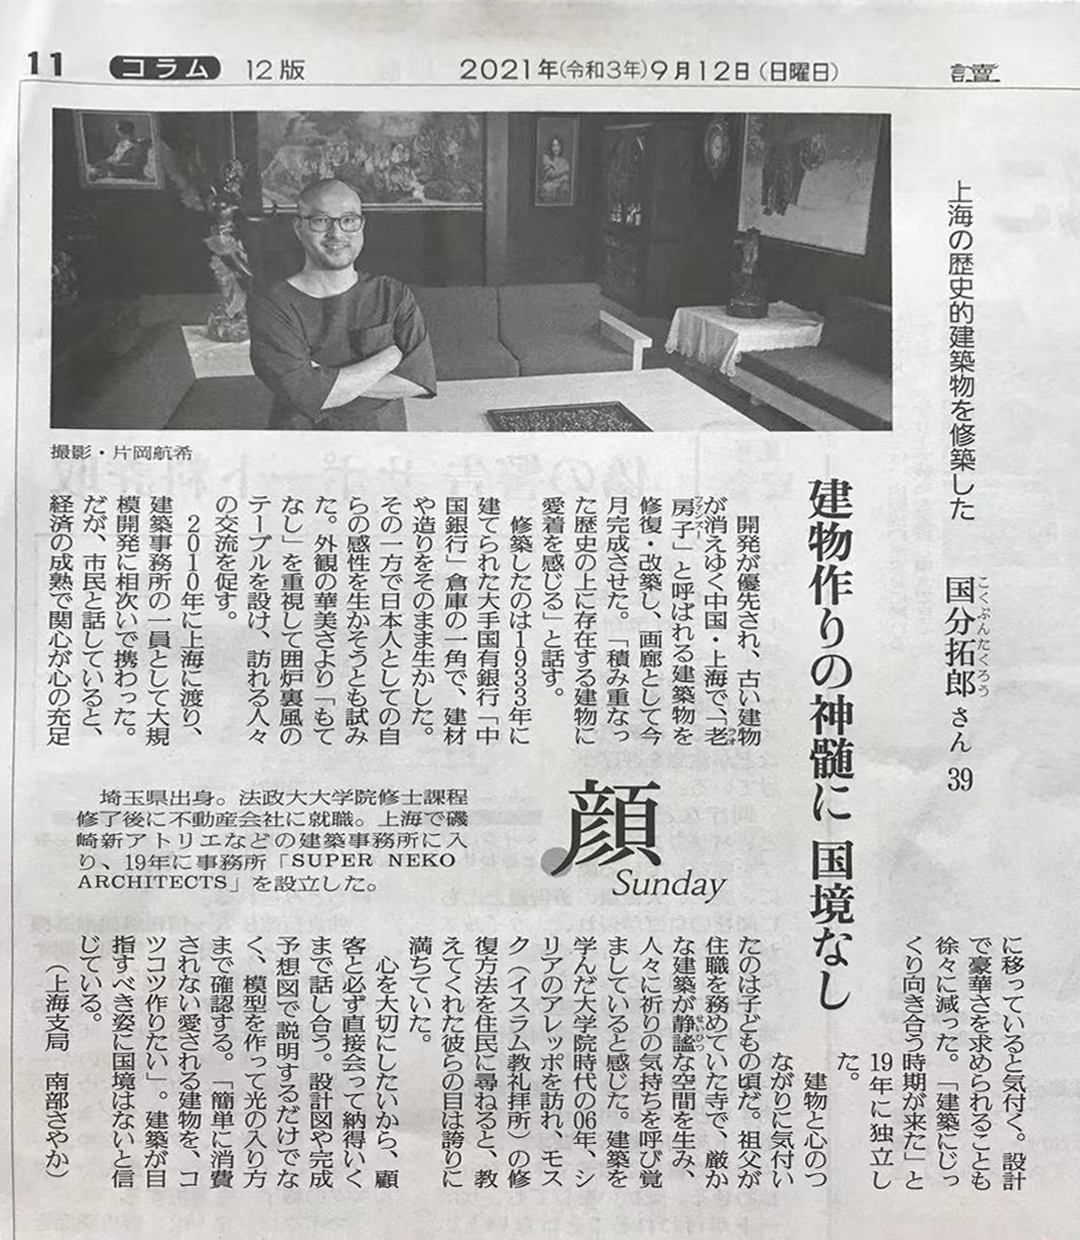 yomiuri newspaper